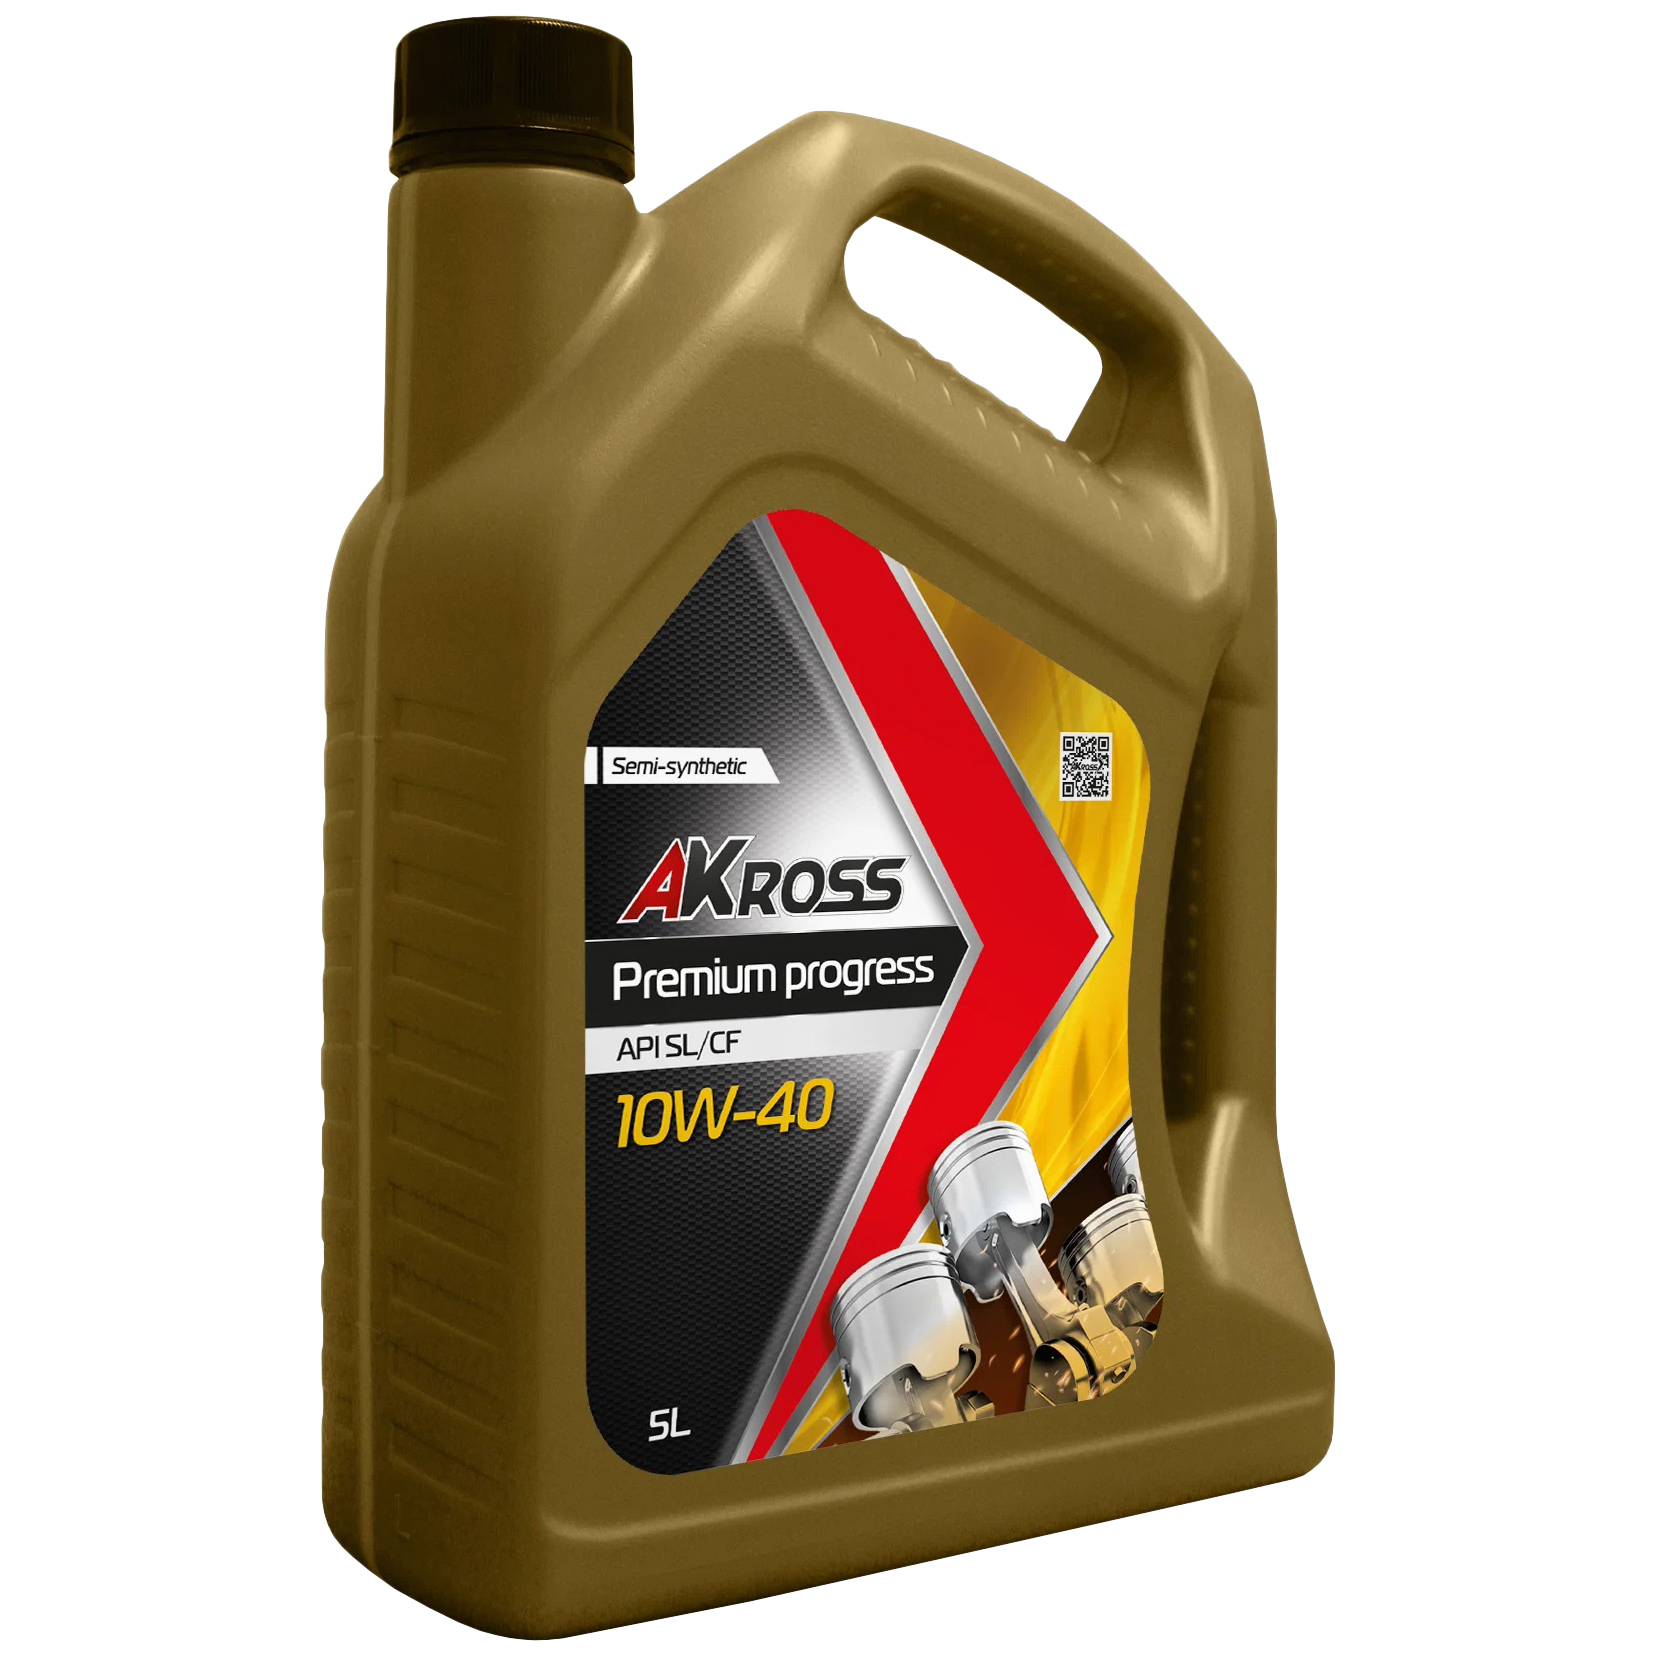 фото Akross моторное масло akross 10w-40 premium progress sl/cf 5 л бензин